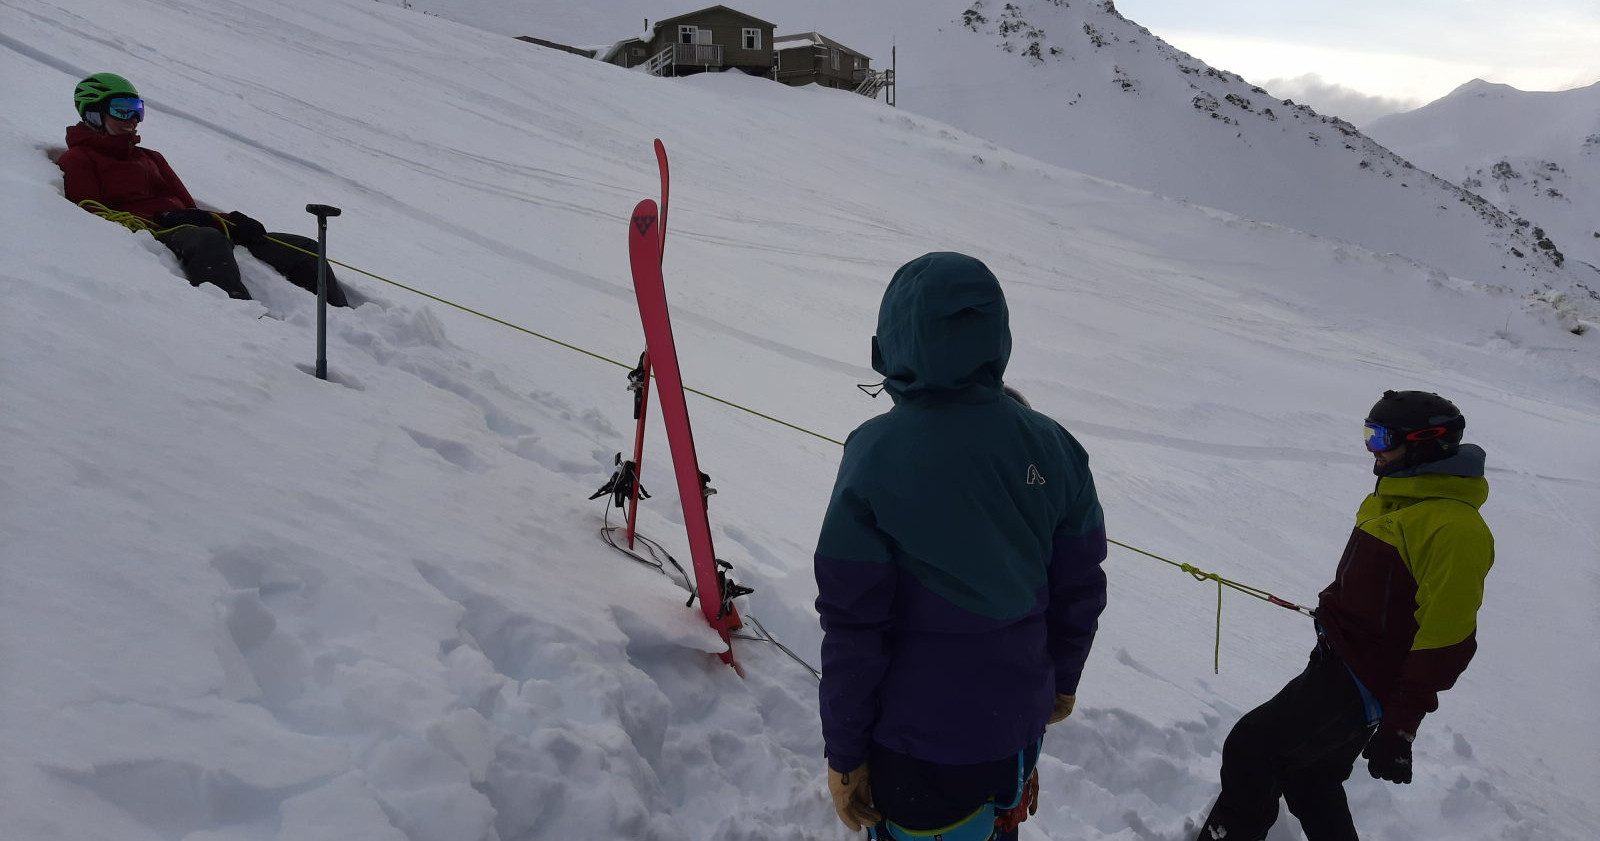 Marek Kuziel - CMC Intro to Ski Mountaneering Course - Day 2 - Anchor training and practice